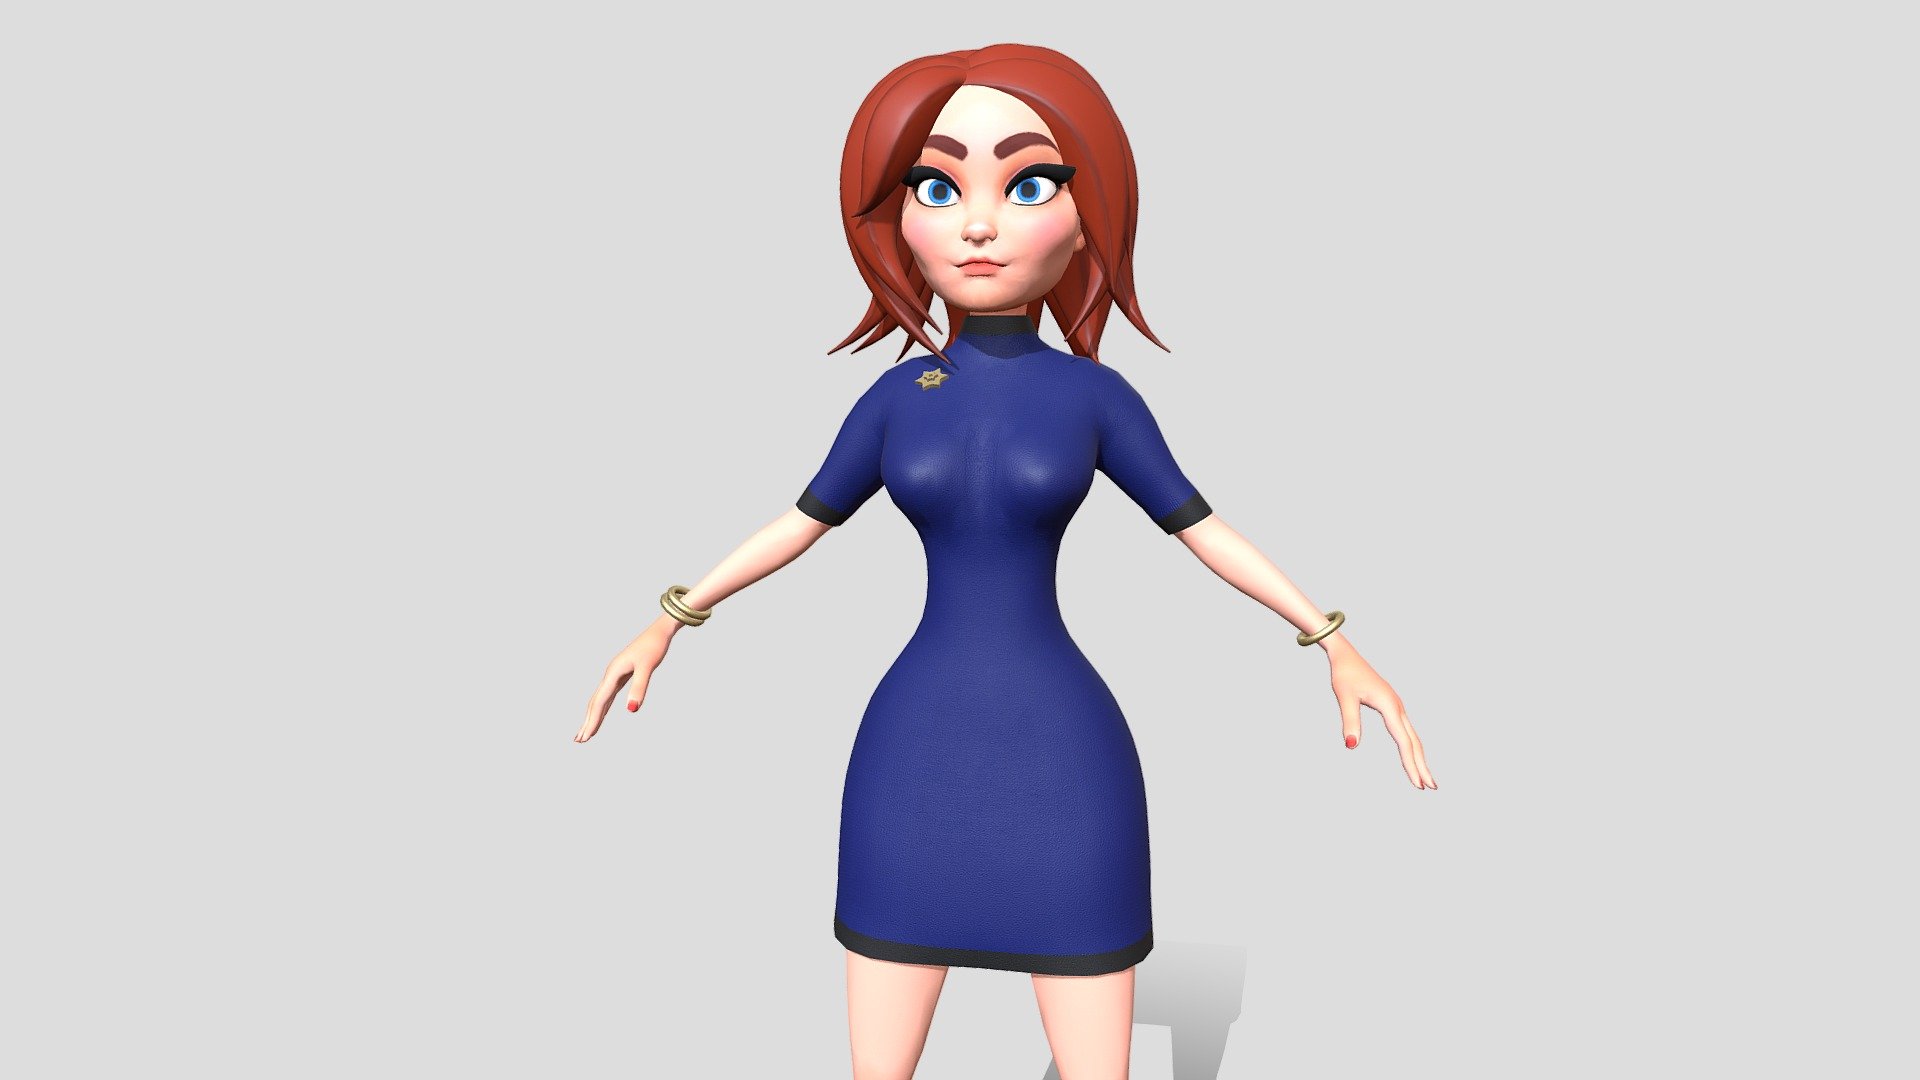 Cartoon Woman 3d game character - Cartoon Woman 3d game character - 3D model by Agarkova_CG 3d model